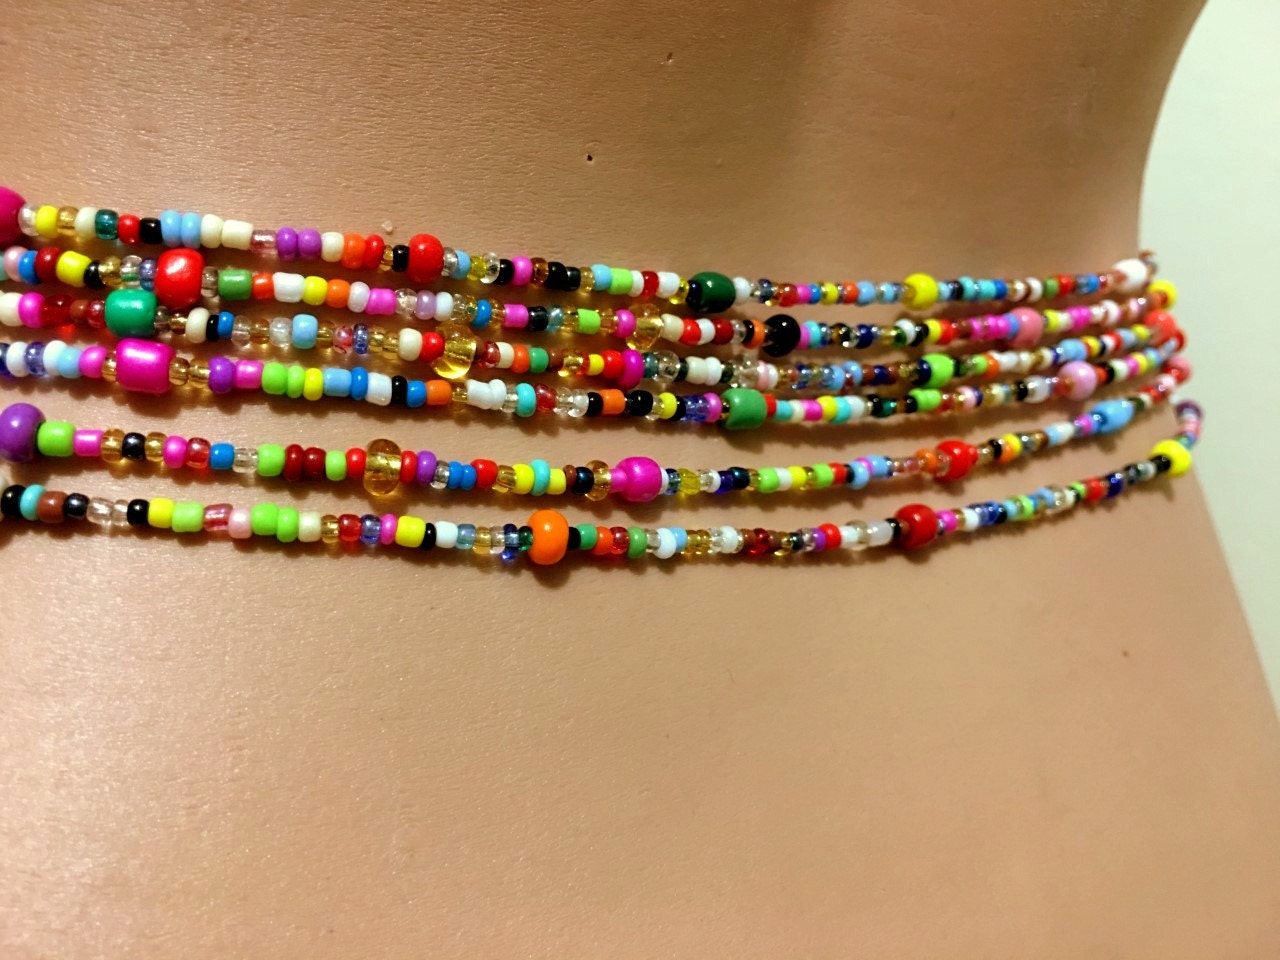 Waist Beads, Body Jewelry, Stretchy Elastic String, Belly Beads, Waist Chain, Belly Chains, Waist Jewelry, African Waist Beads